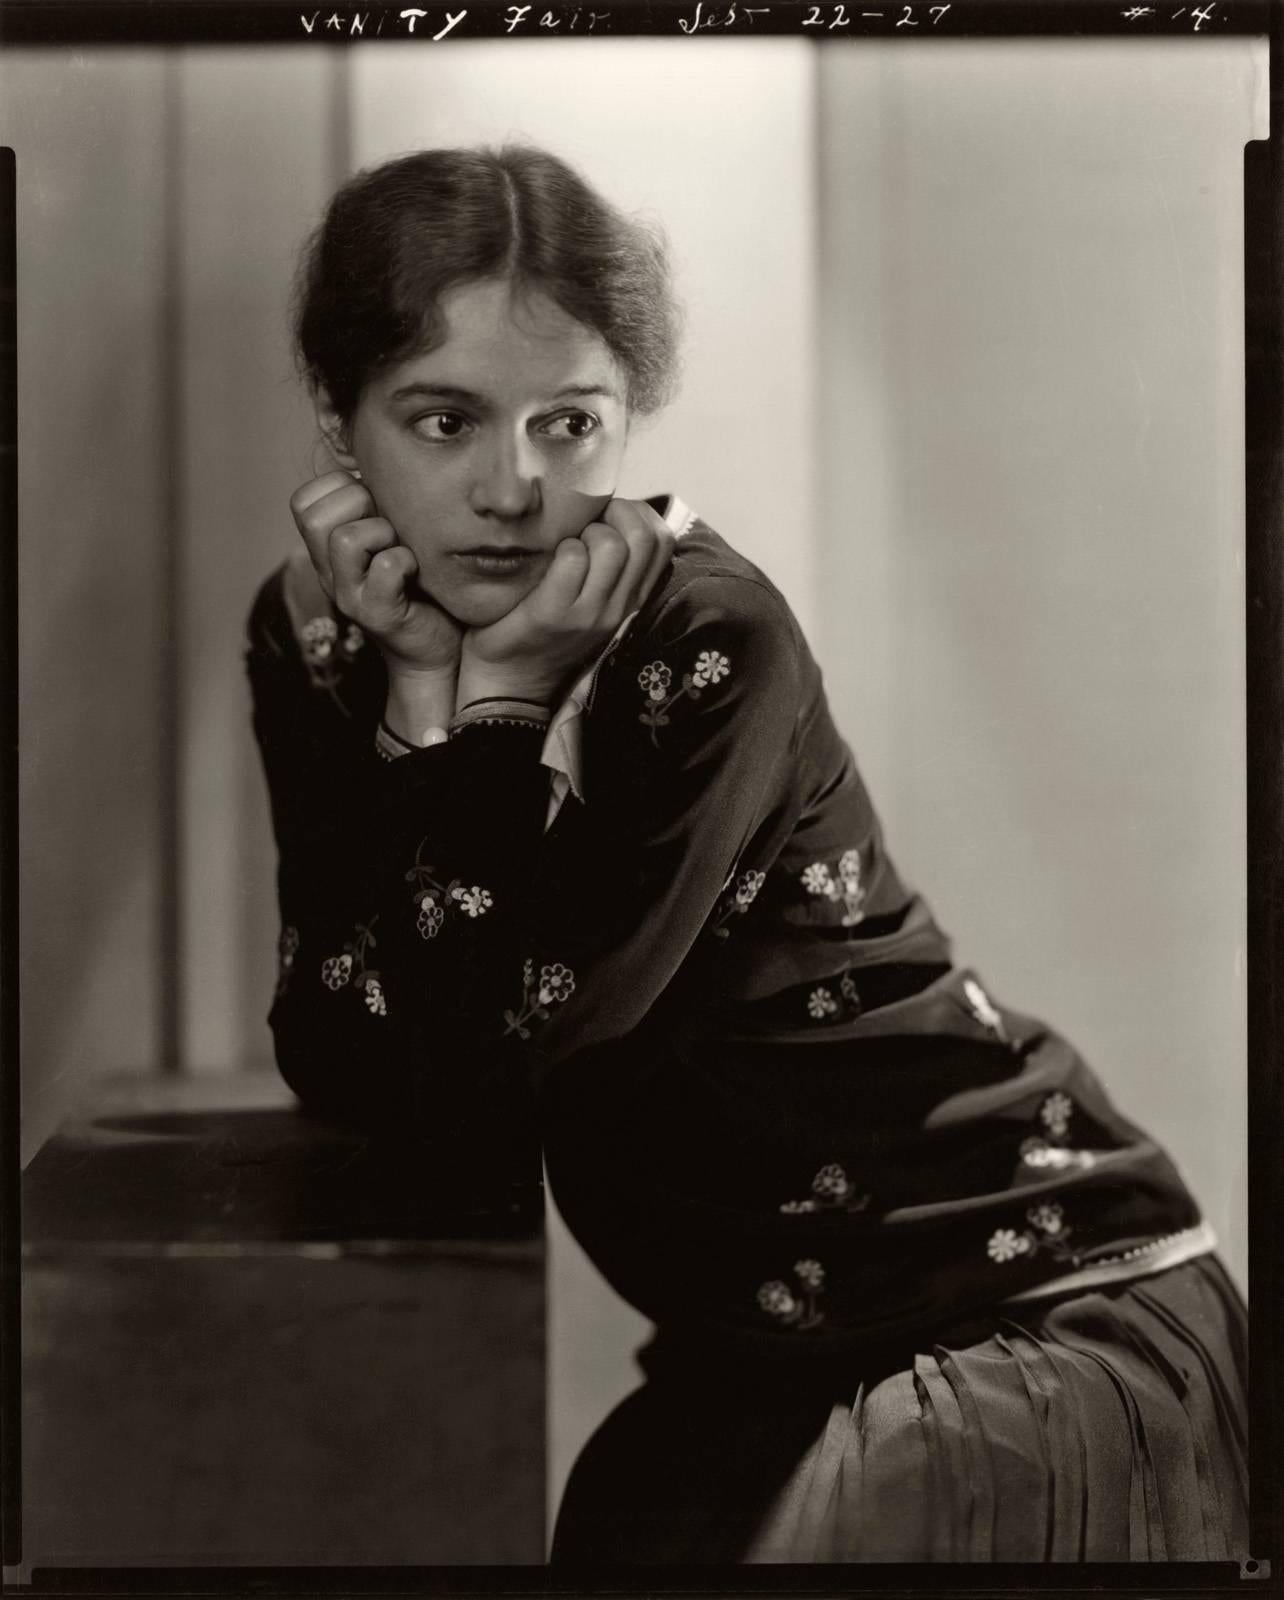 Edward Steichen Portrait Photograph - Vanity Fair, September 22nd 